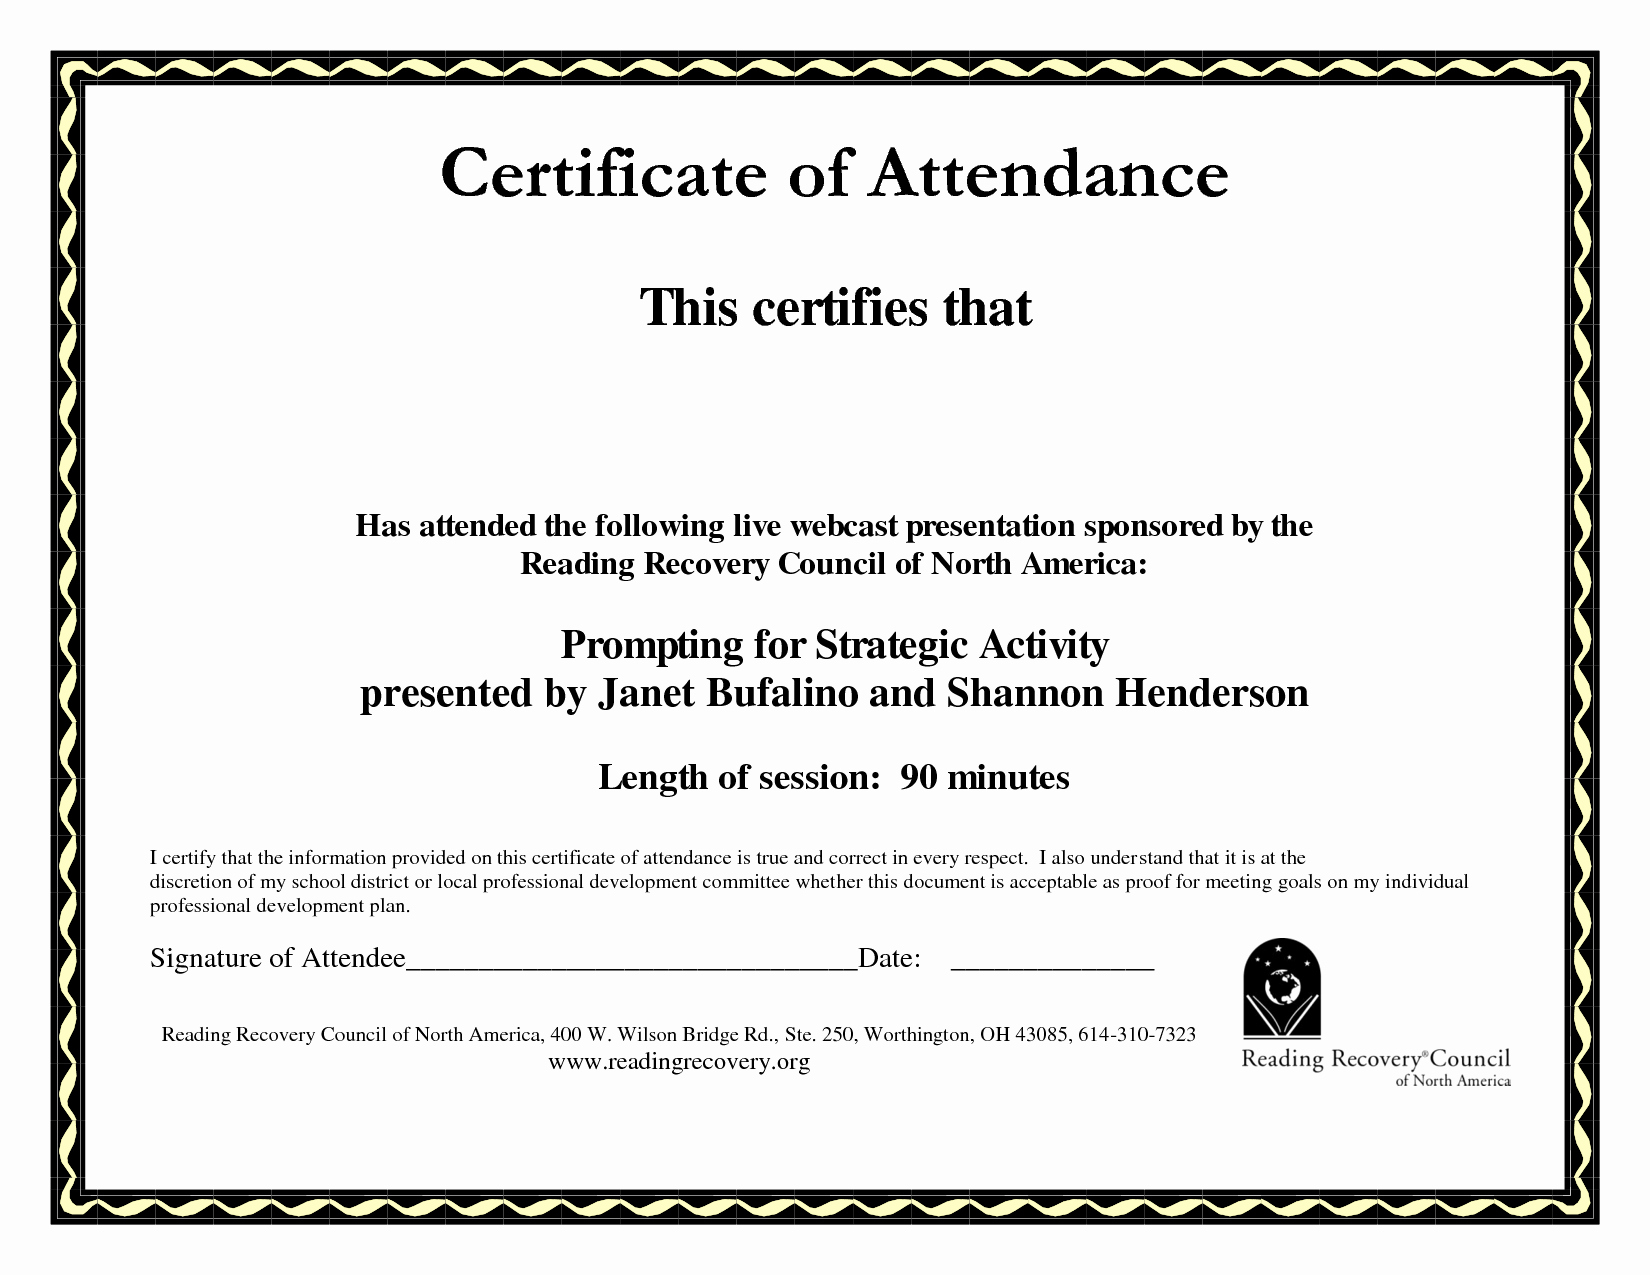 30 Ceu Certificate Of Attendance Template | Pryncepality For Conference Certificate Of Attendance Template